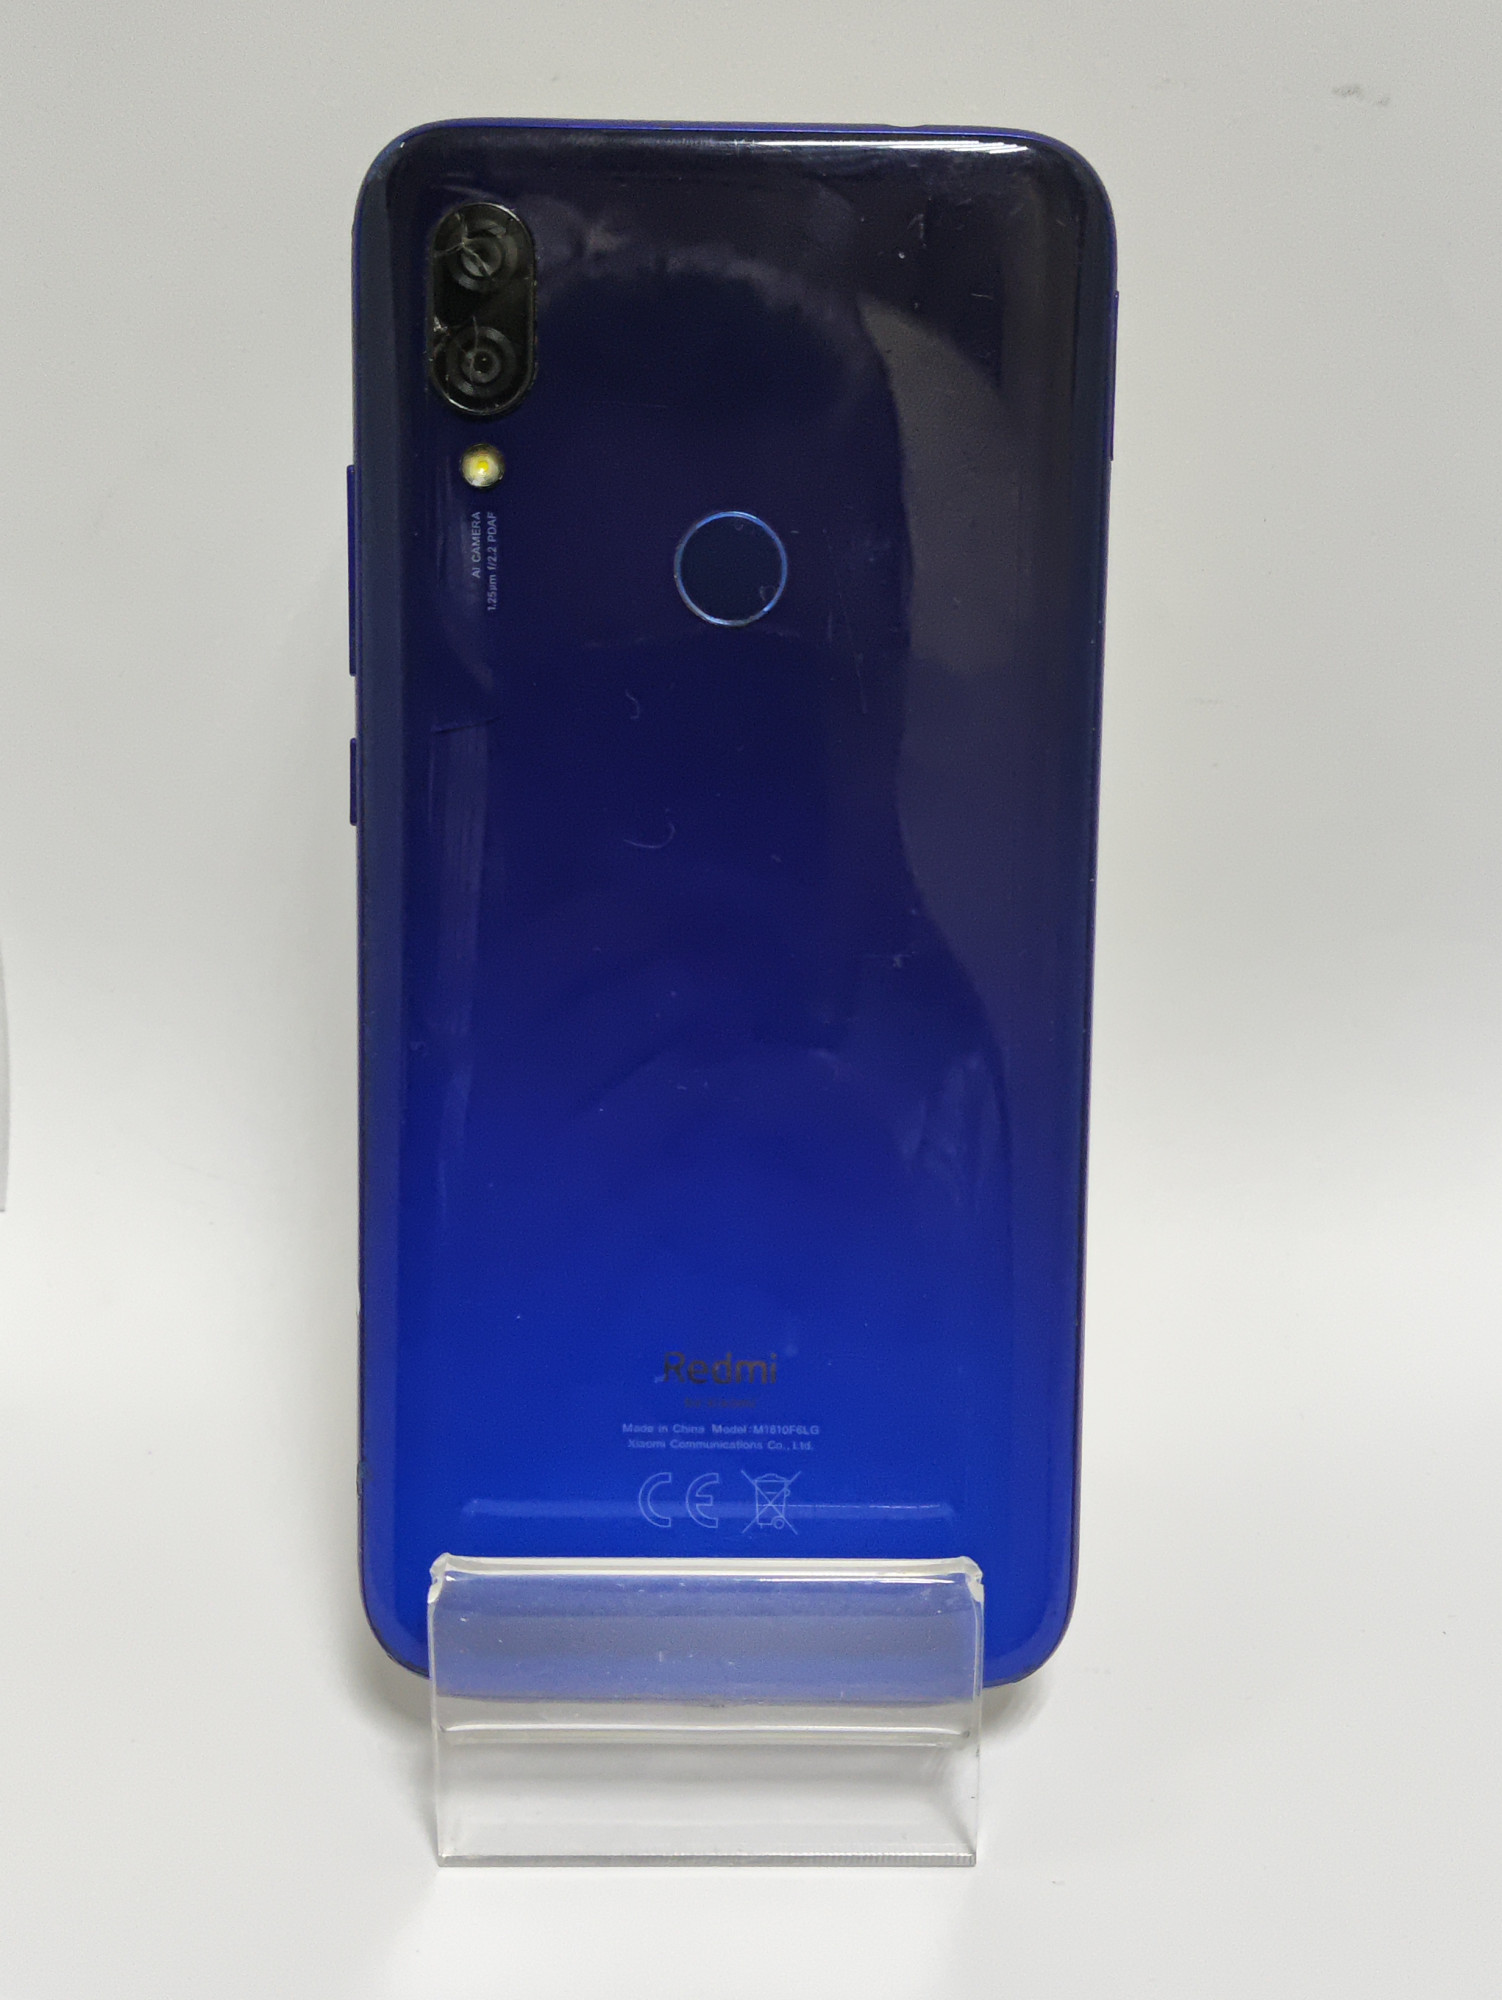 Xiaomi Redmi 7 3/32GB Comet Blue 1